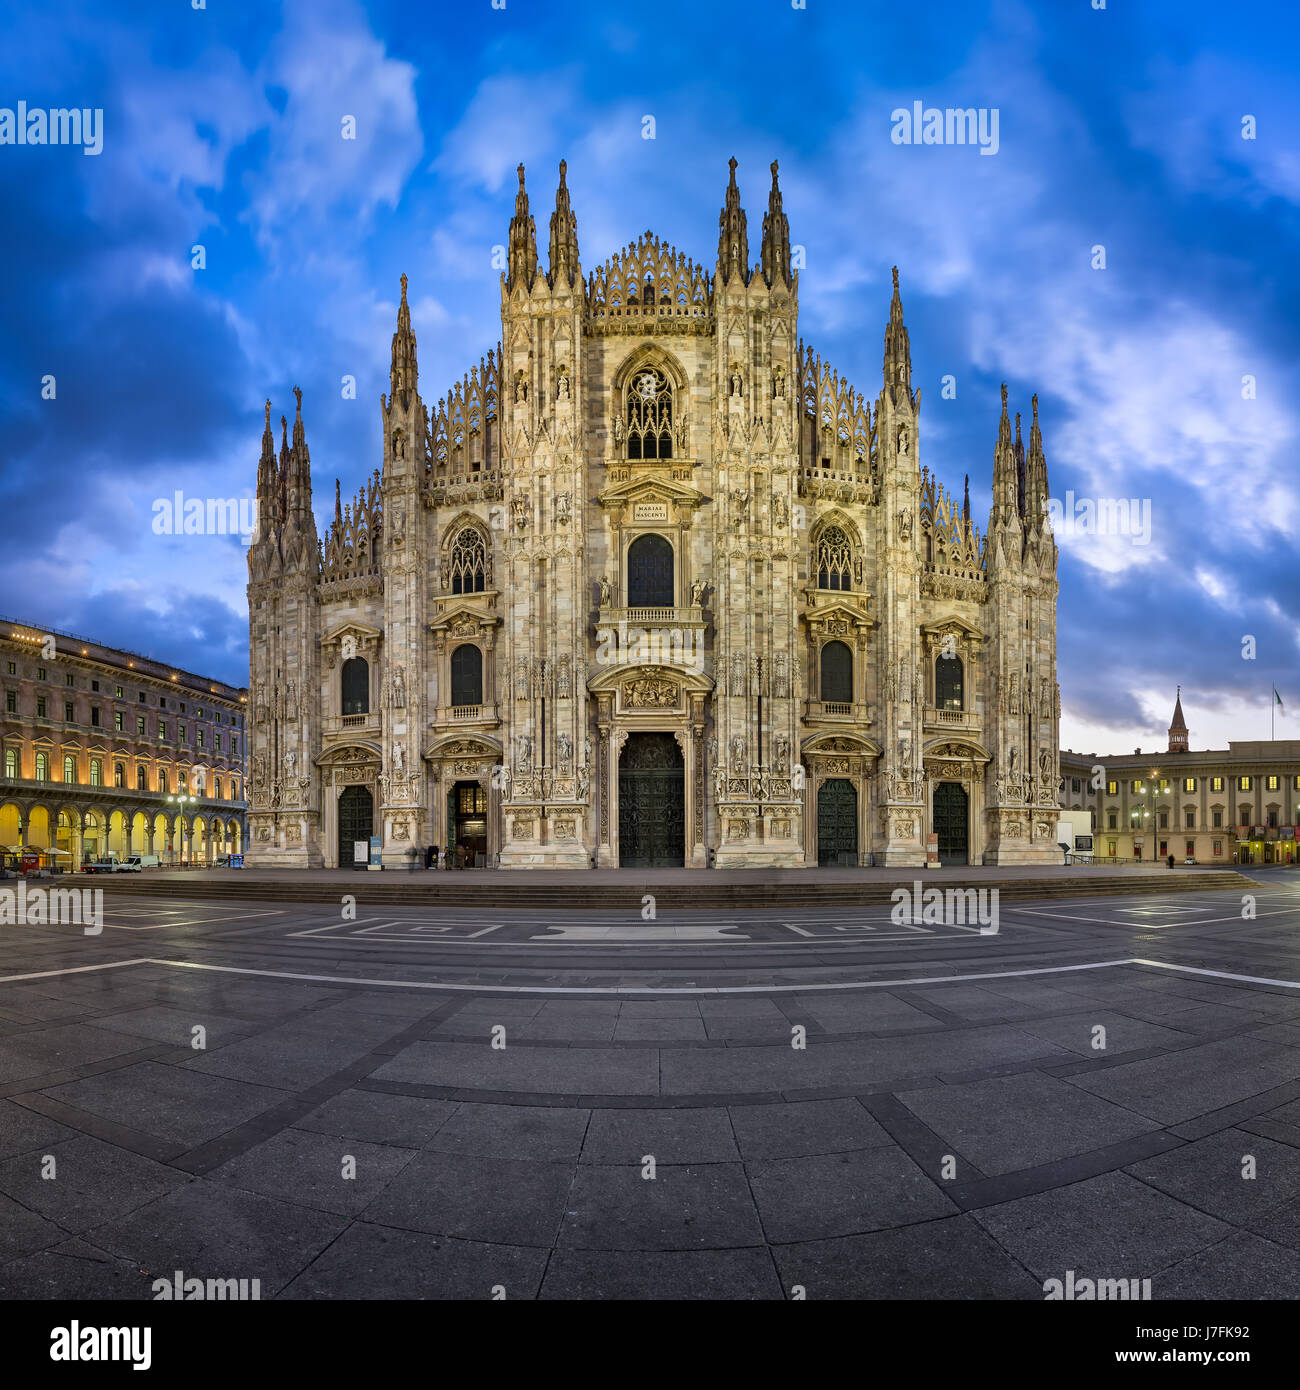 Duomo di Milano (la cathédrale de Milan) et la Piazza del Duomo, dans le Matin, Milan, Italie Banque D'Images